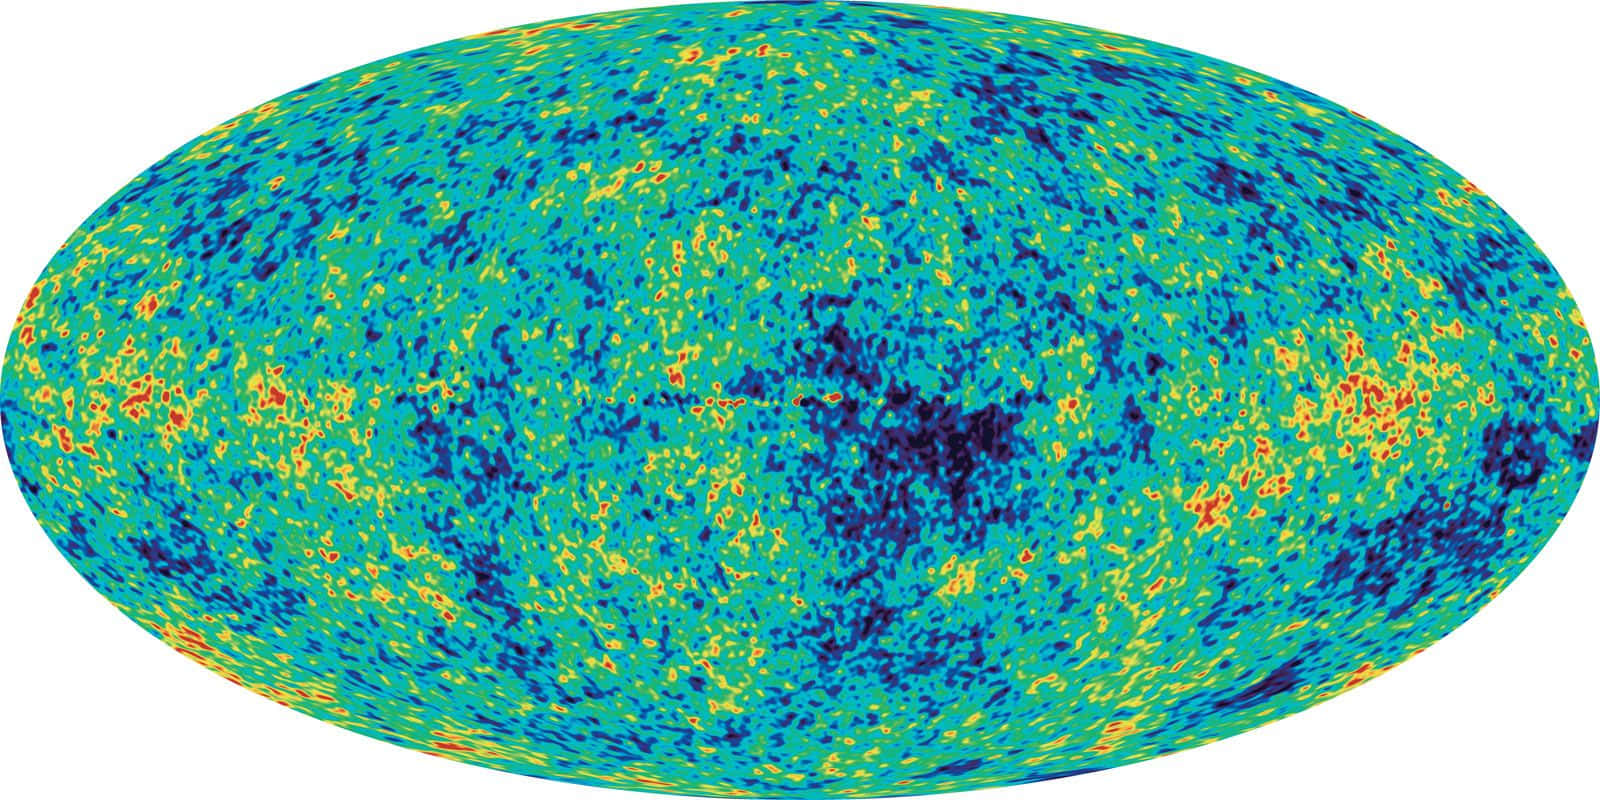 Cosmic Microwave Background Radiation Turbulent